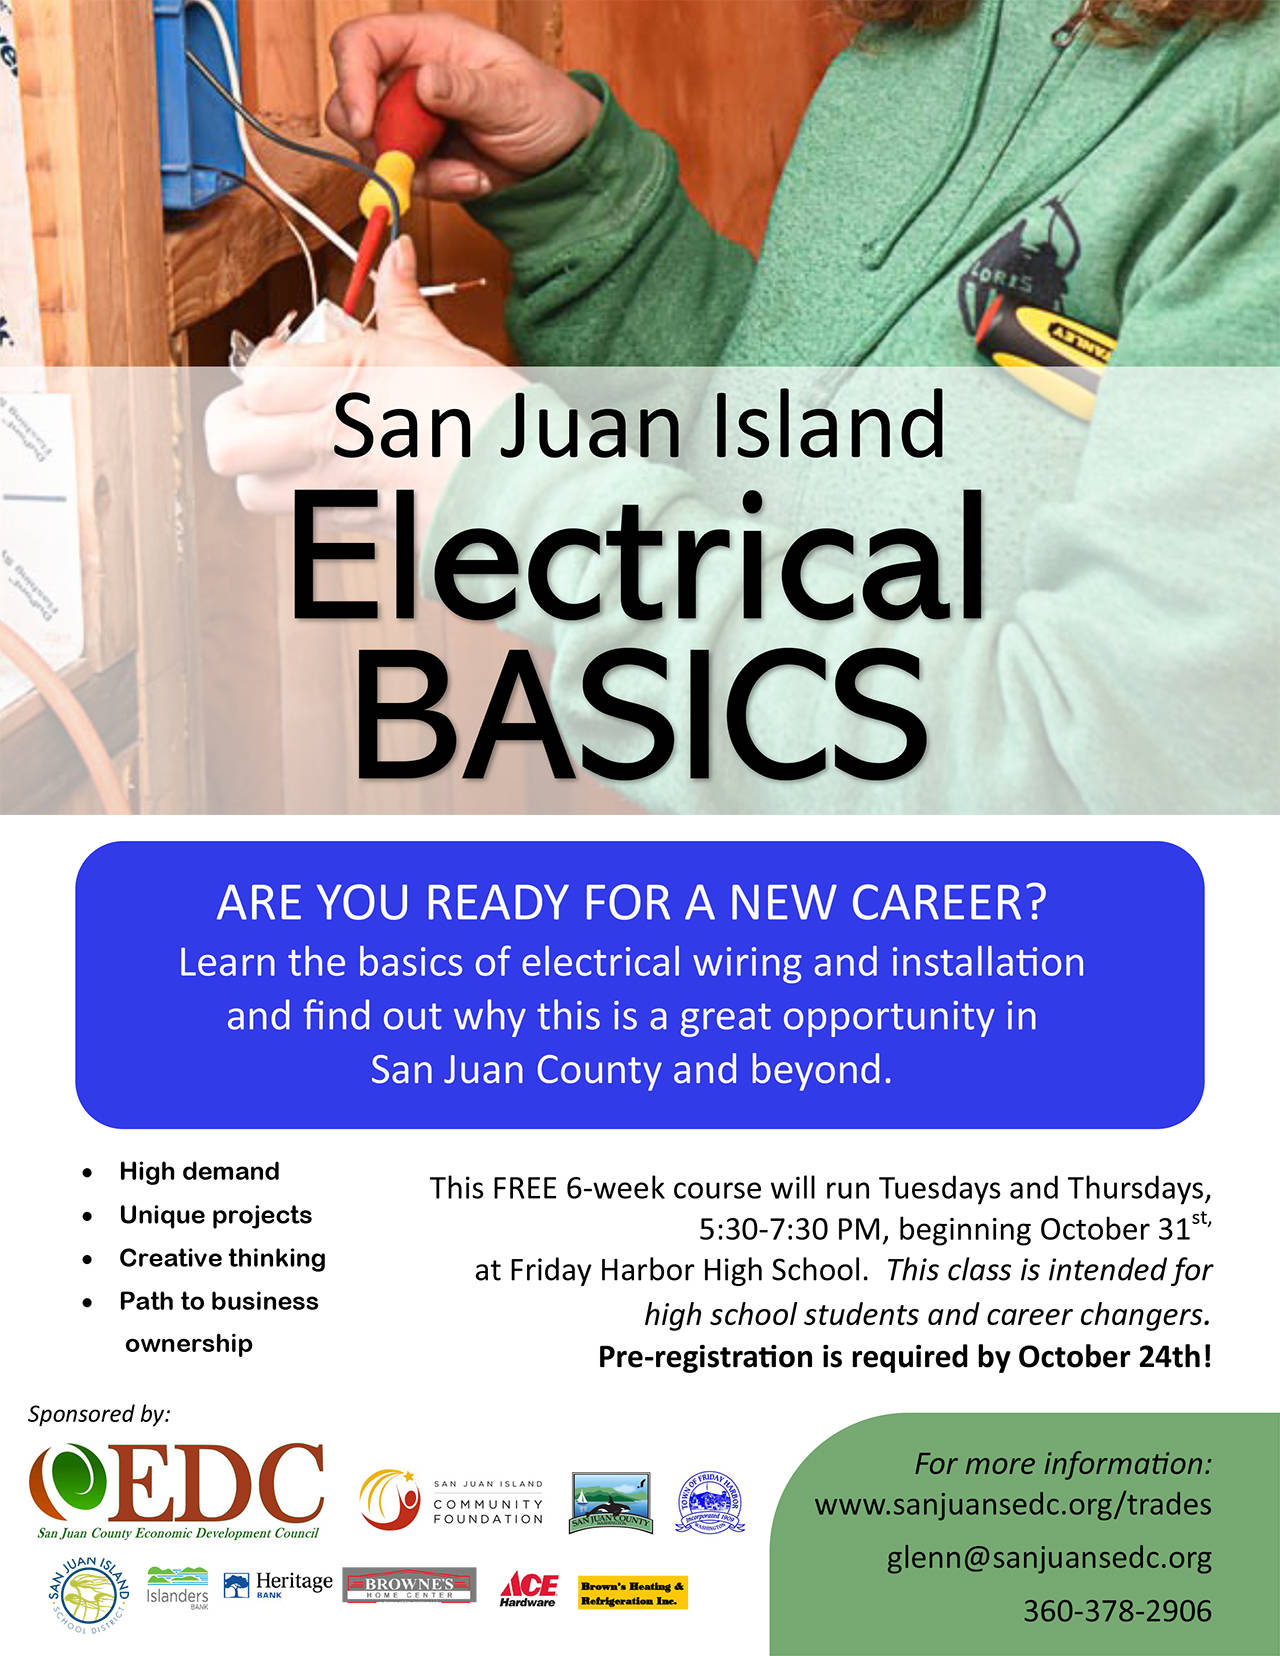 EDC offers free electrical basics training